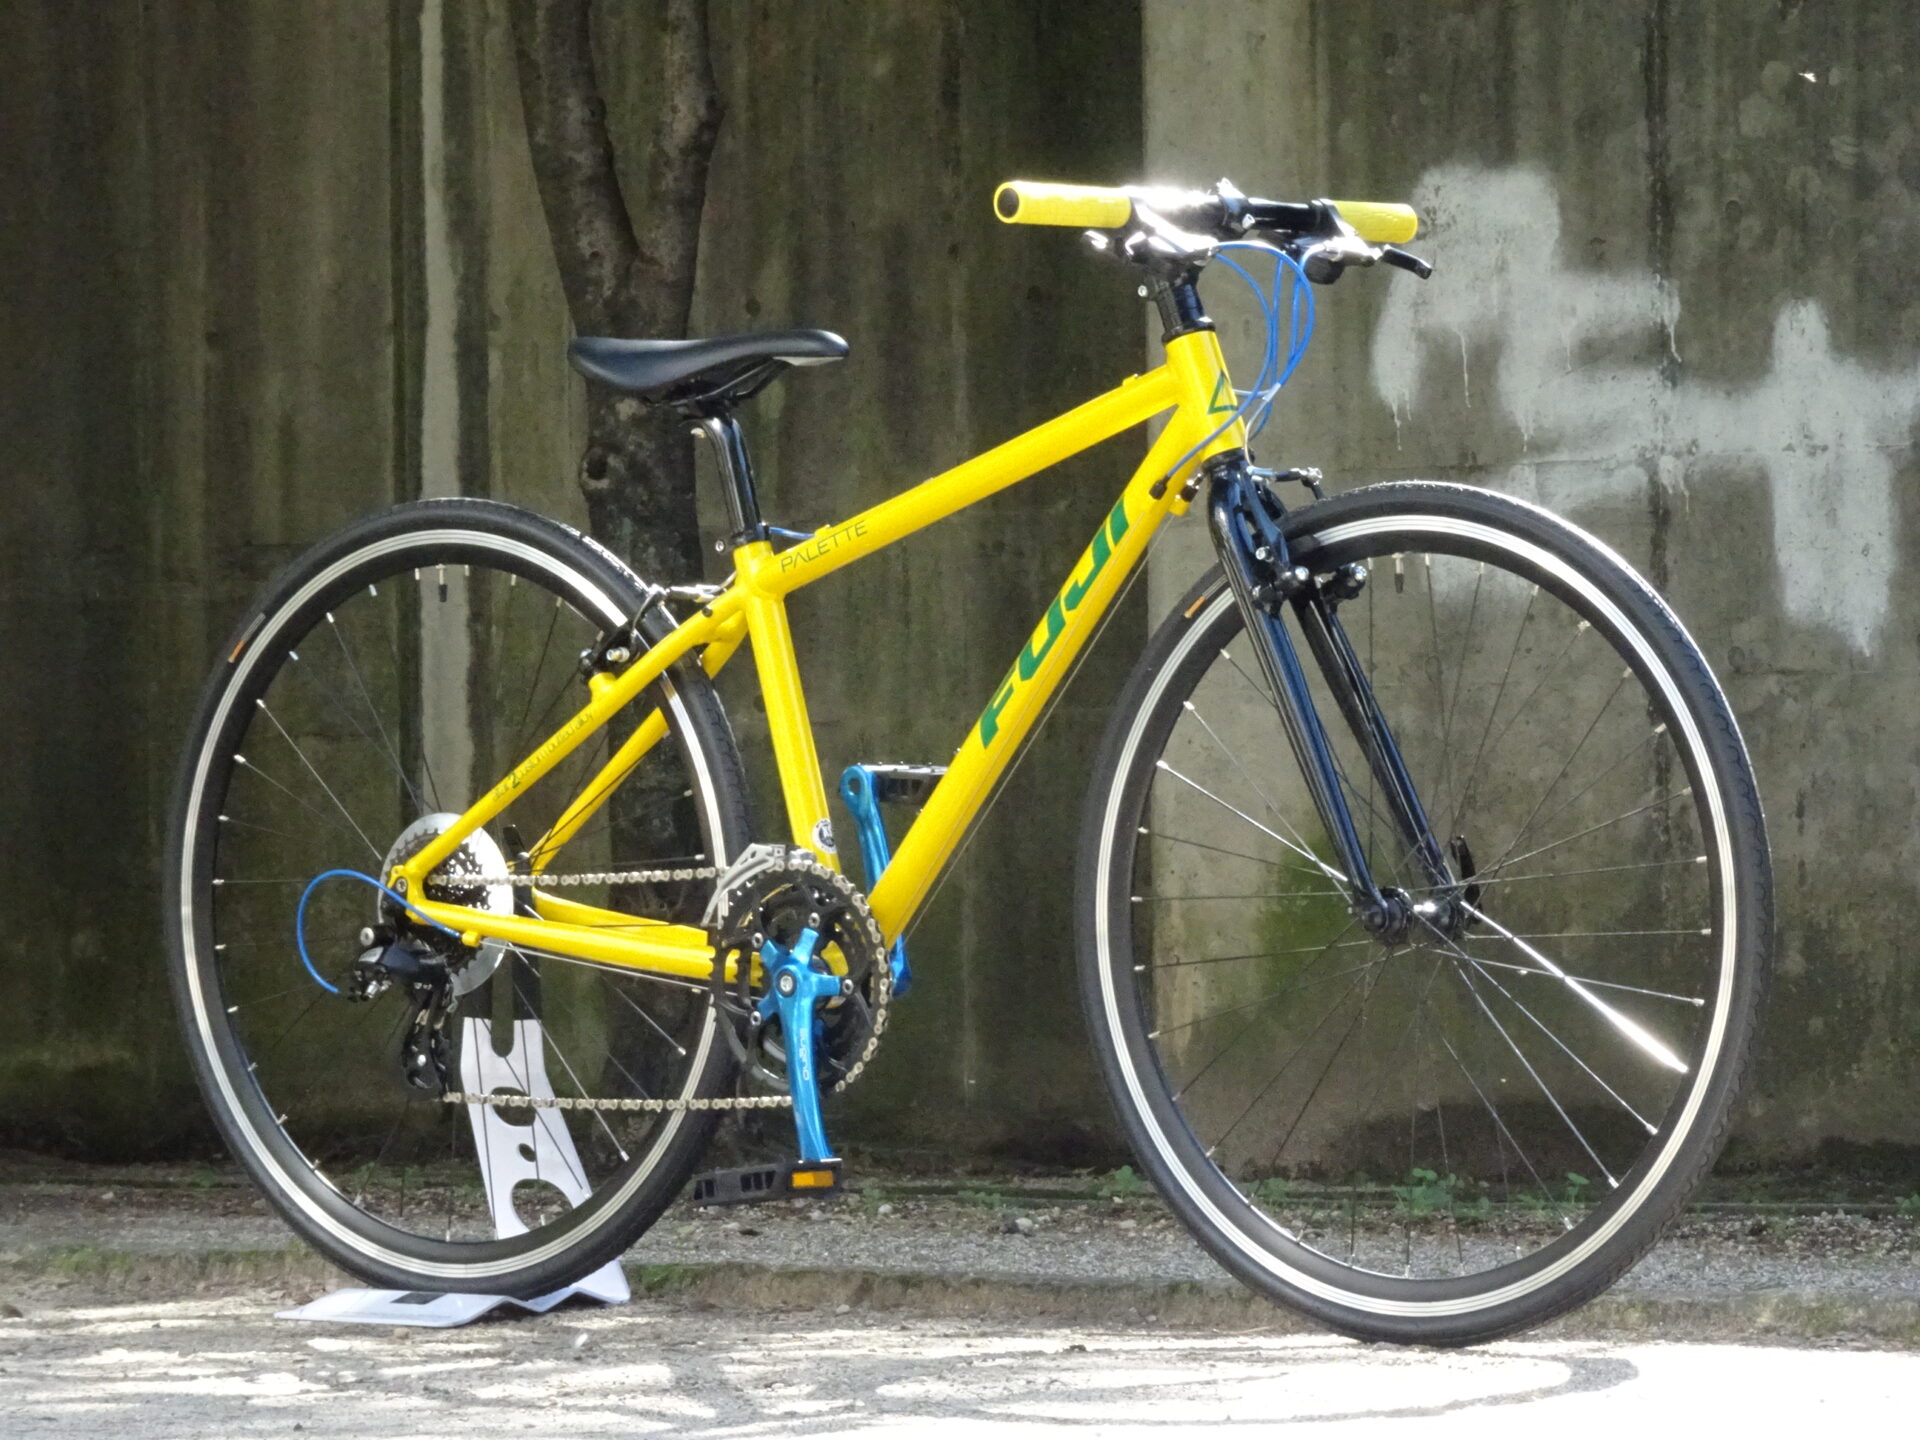 30 Off Fujiのクロスバイクpalette 16年モデルがお買い得価格 京都の中古自転車 新車販売 サイクルショップ エイリン